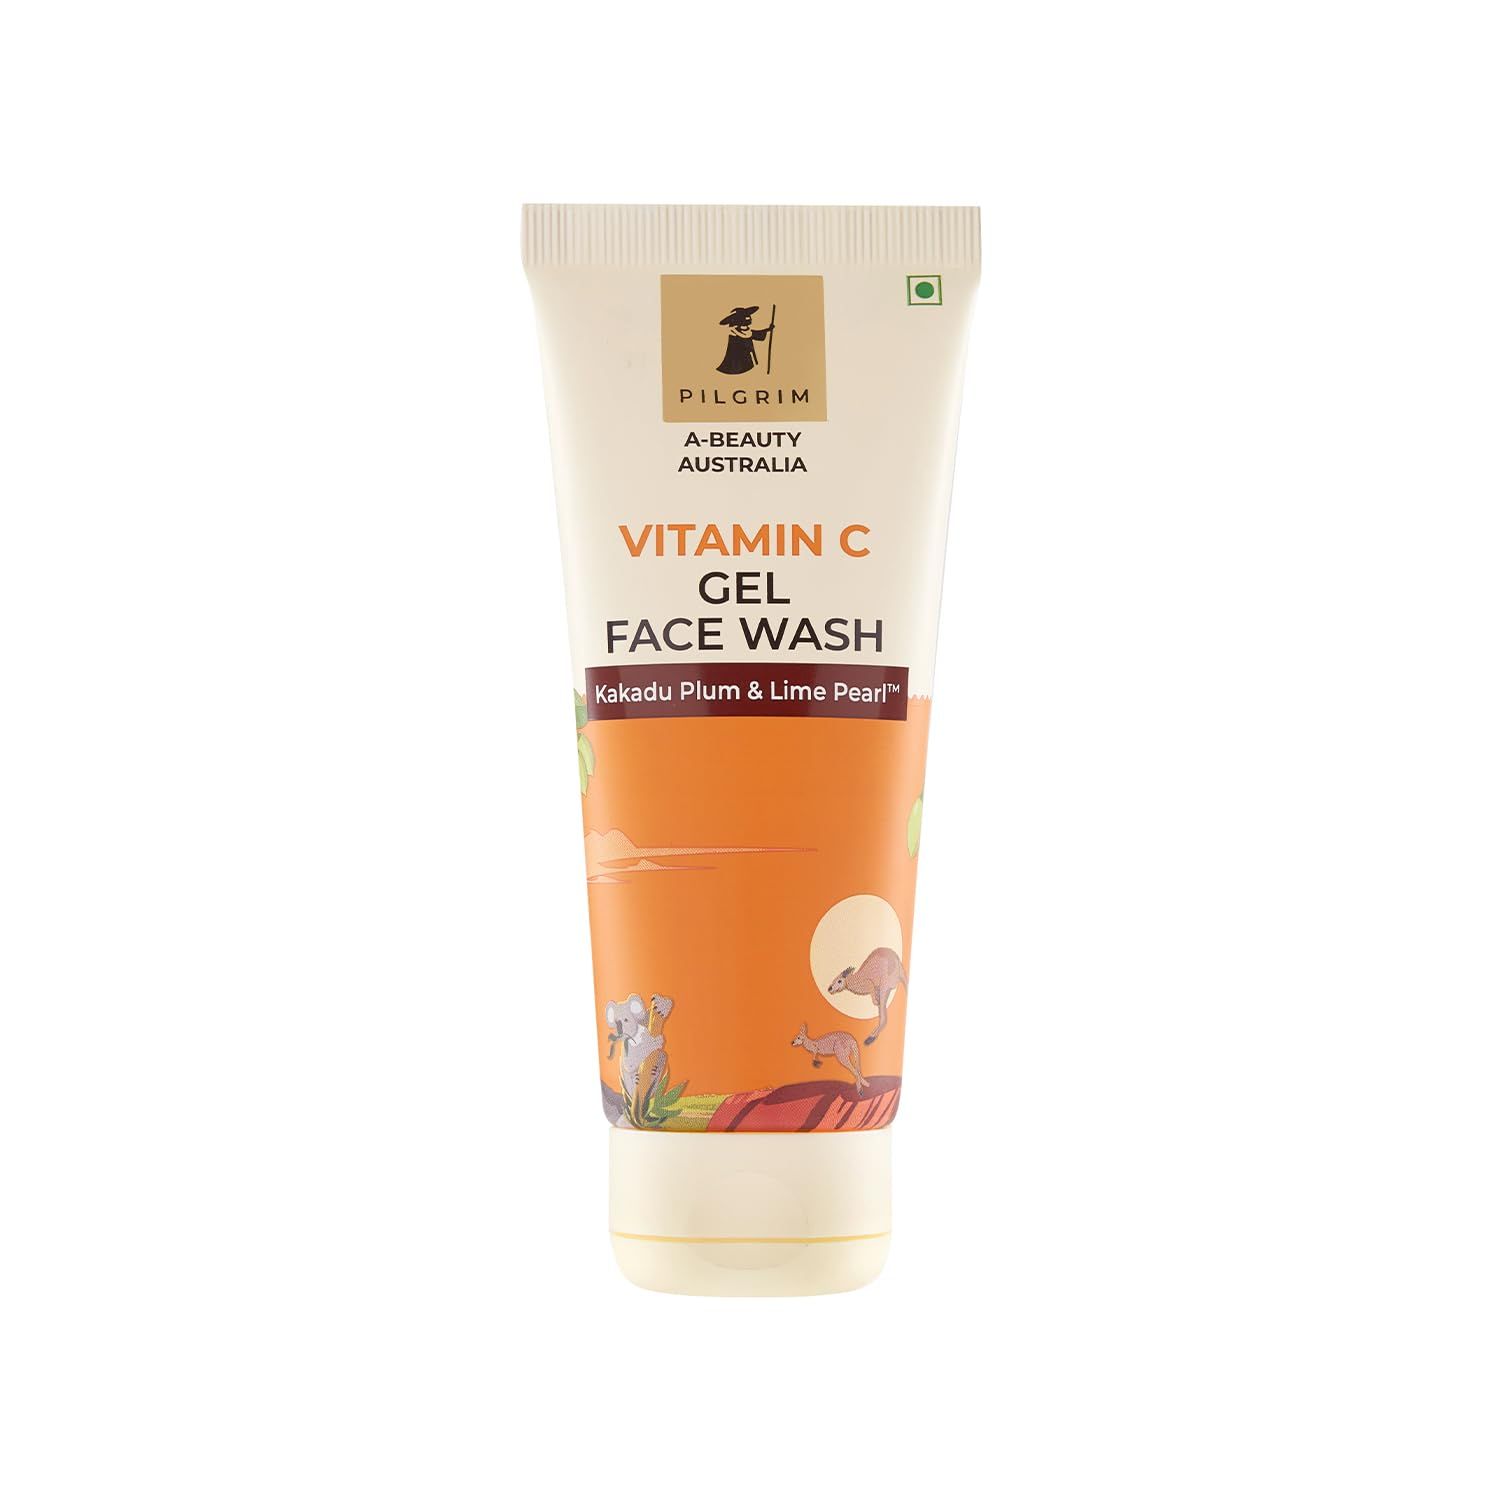 Pilgrim Australian Vitamin C Gel Face Wash for for dry/ radiant/ glowing skin with Kakadu Plum & Lime Pearl� | Women & Men | 100 ml